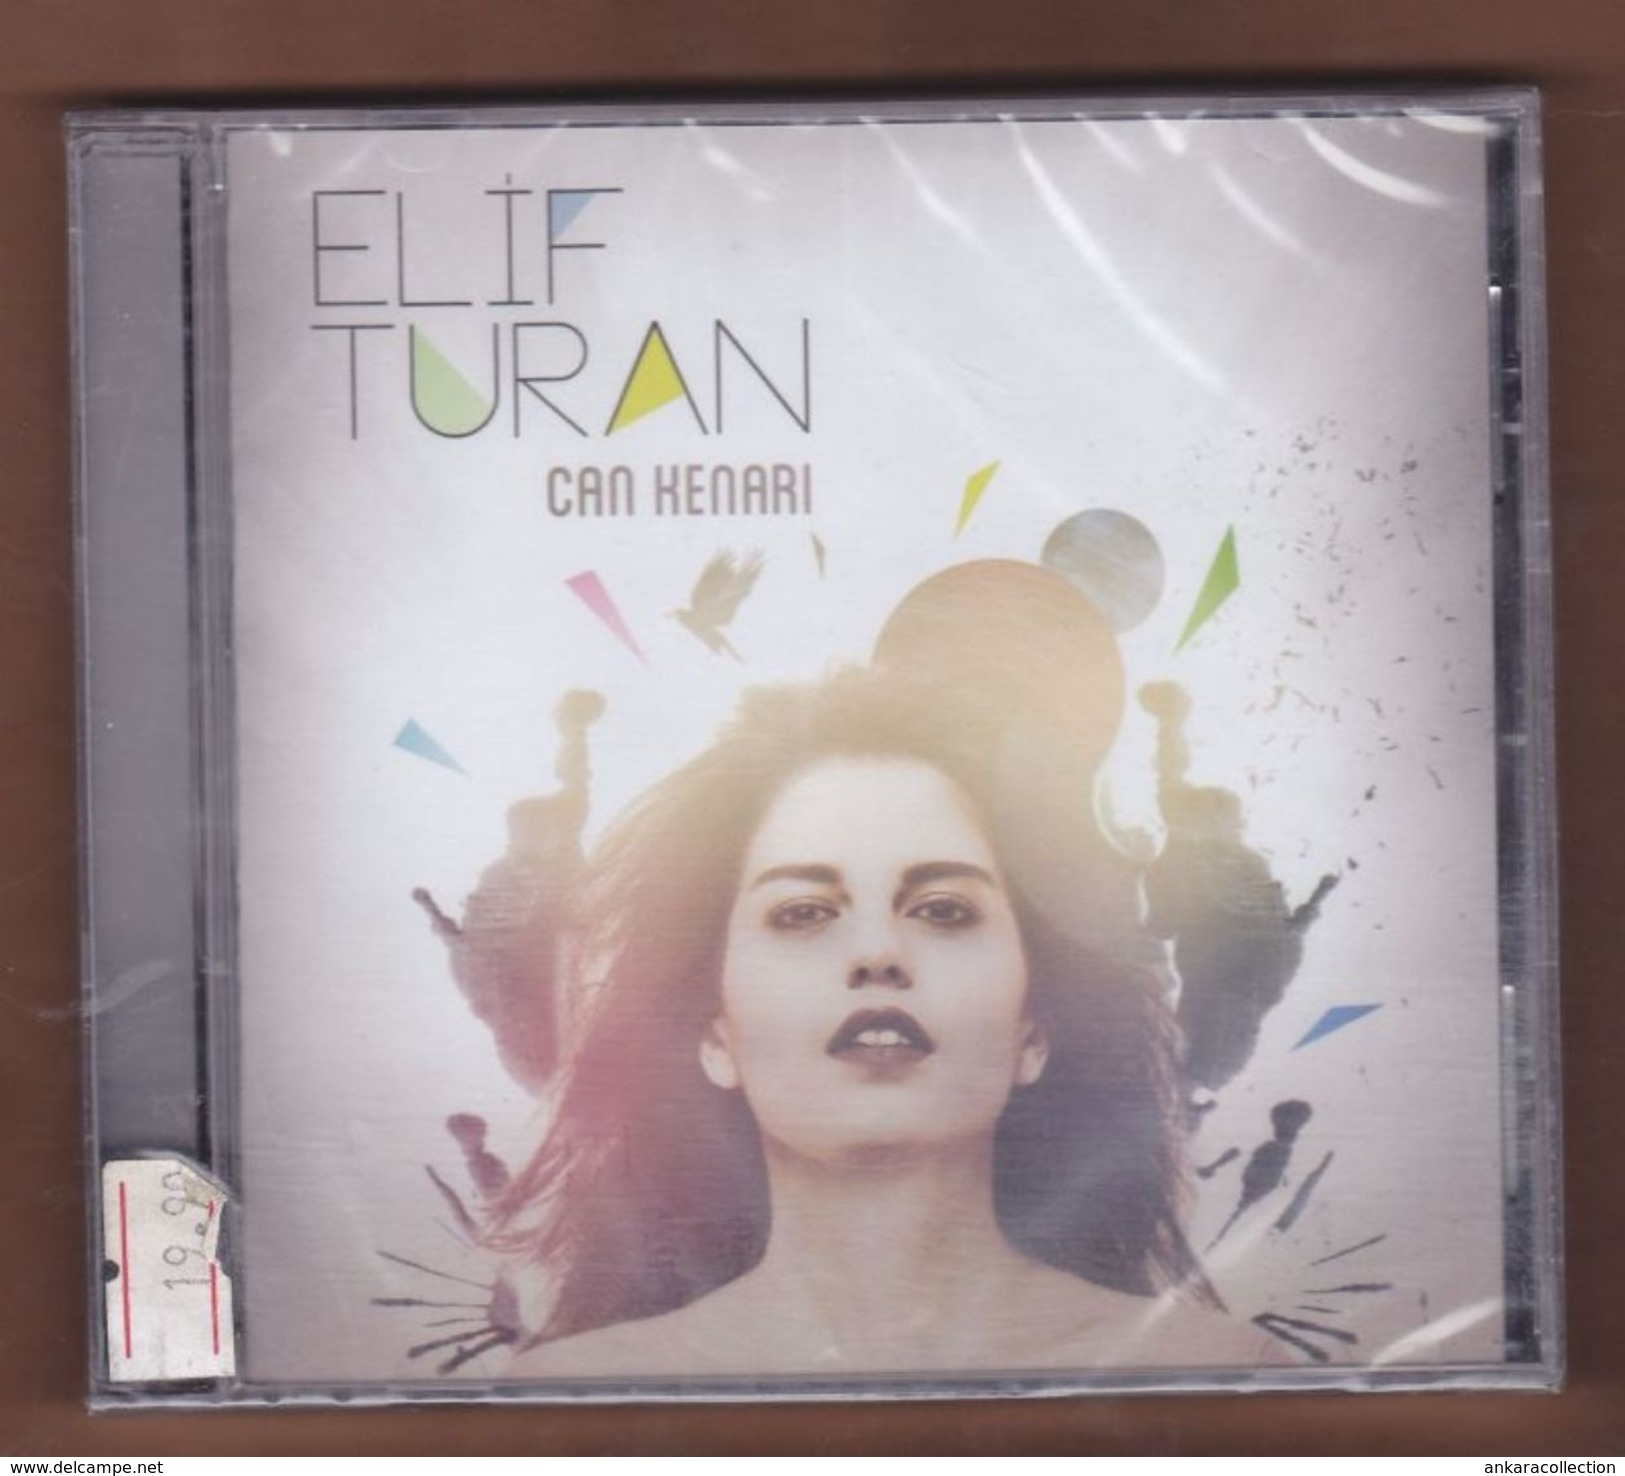 AC - ELIF TURAN CAN KENARI BRAND NEW TURKISH MUSIC CD - World Music